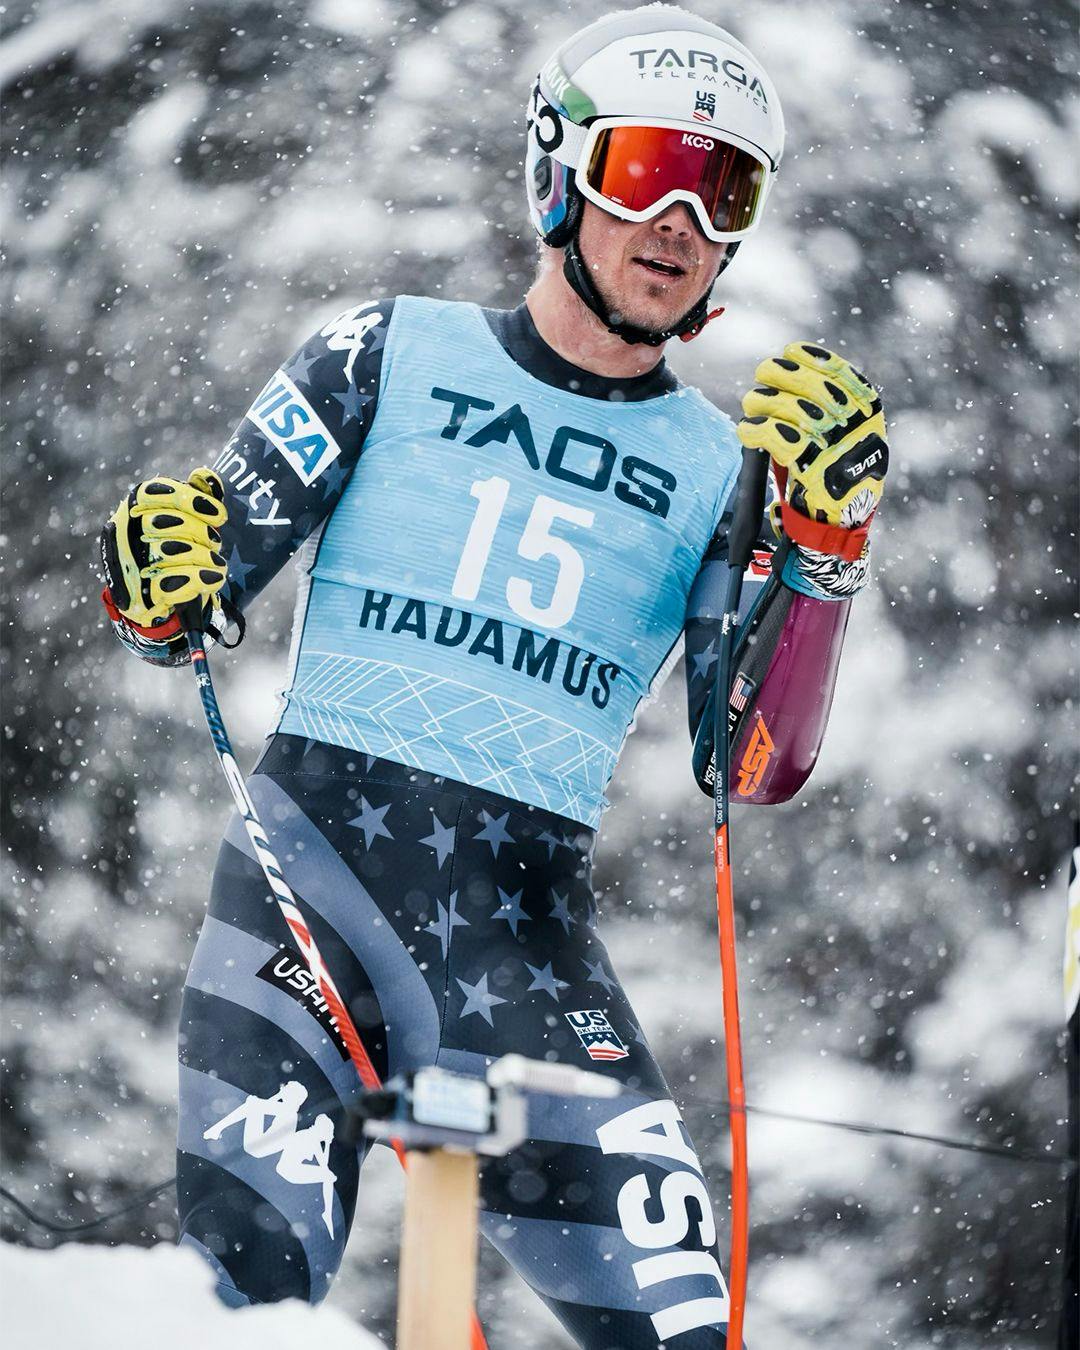 Taos sponsored ski racer River Radamus wears a taos branded ski suit